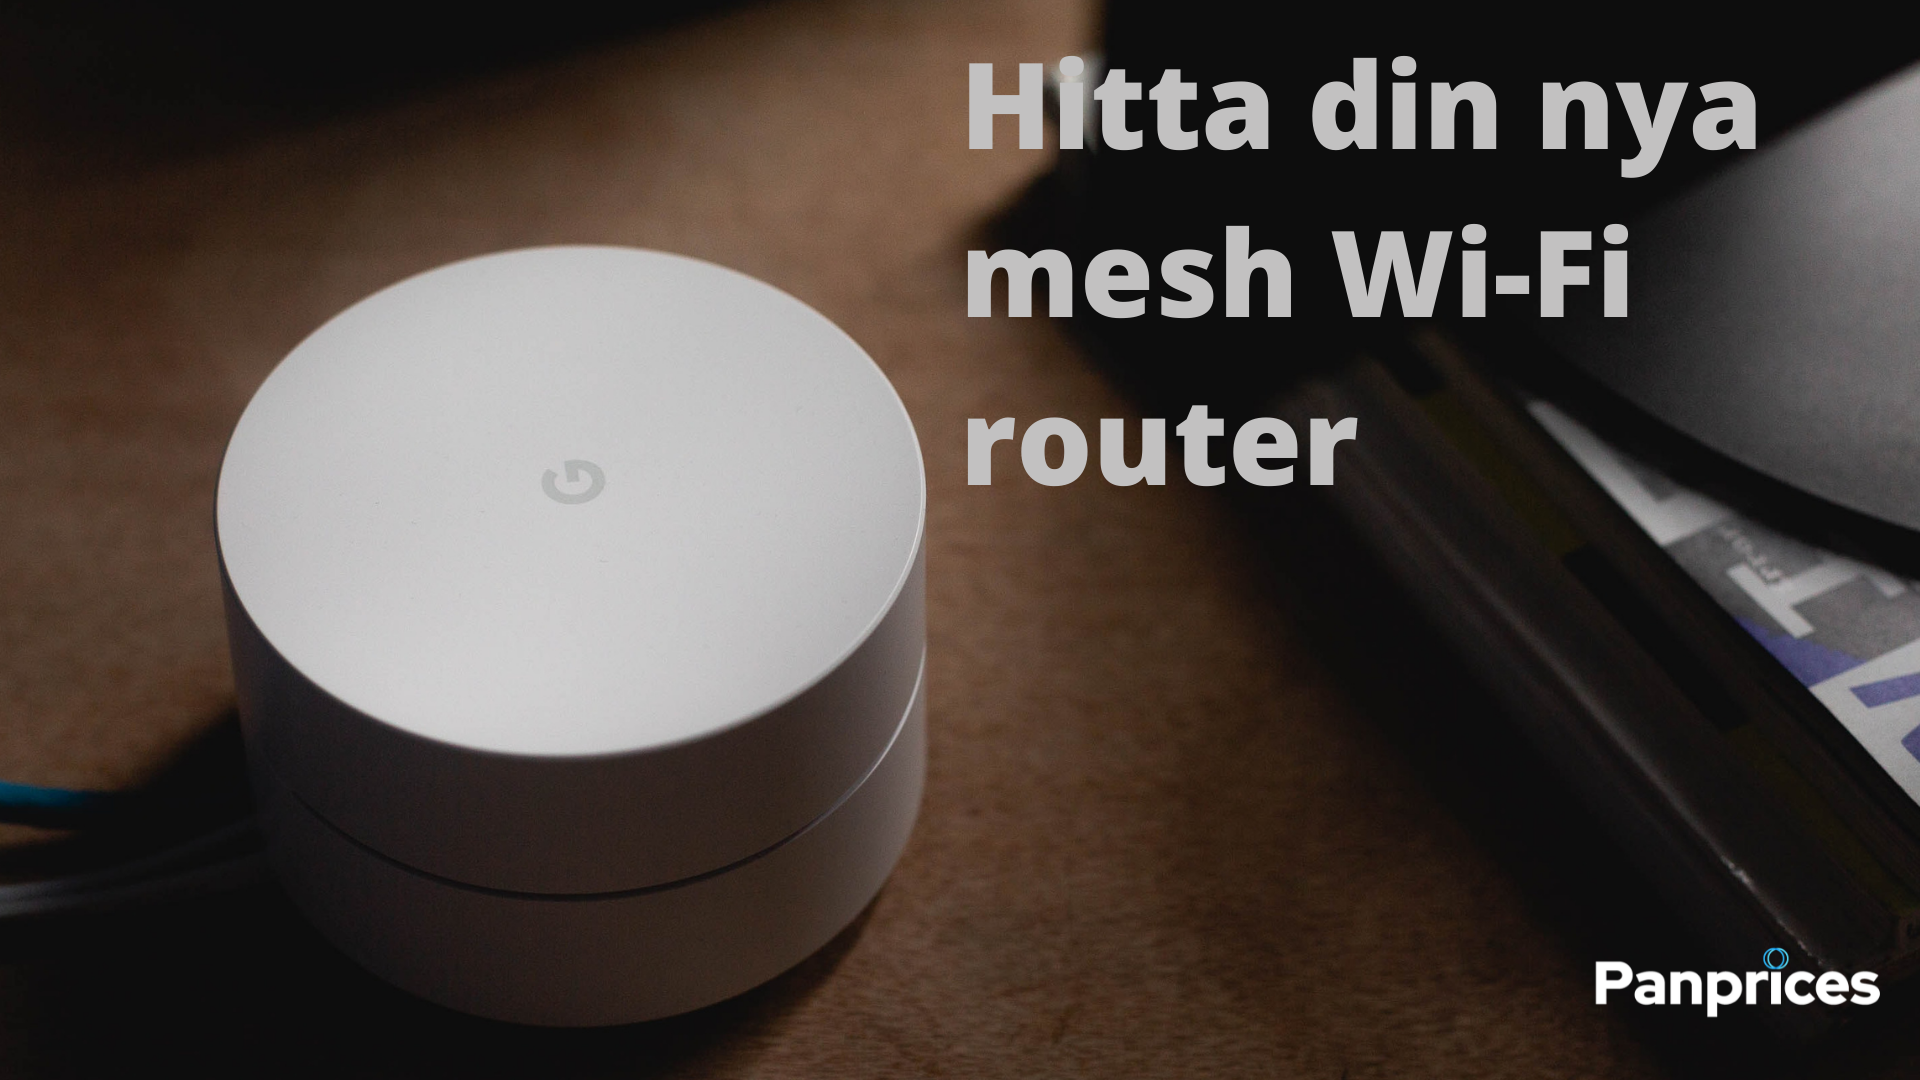 Hitta din nya mesh Wi-Fi router